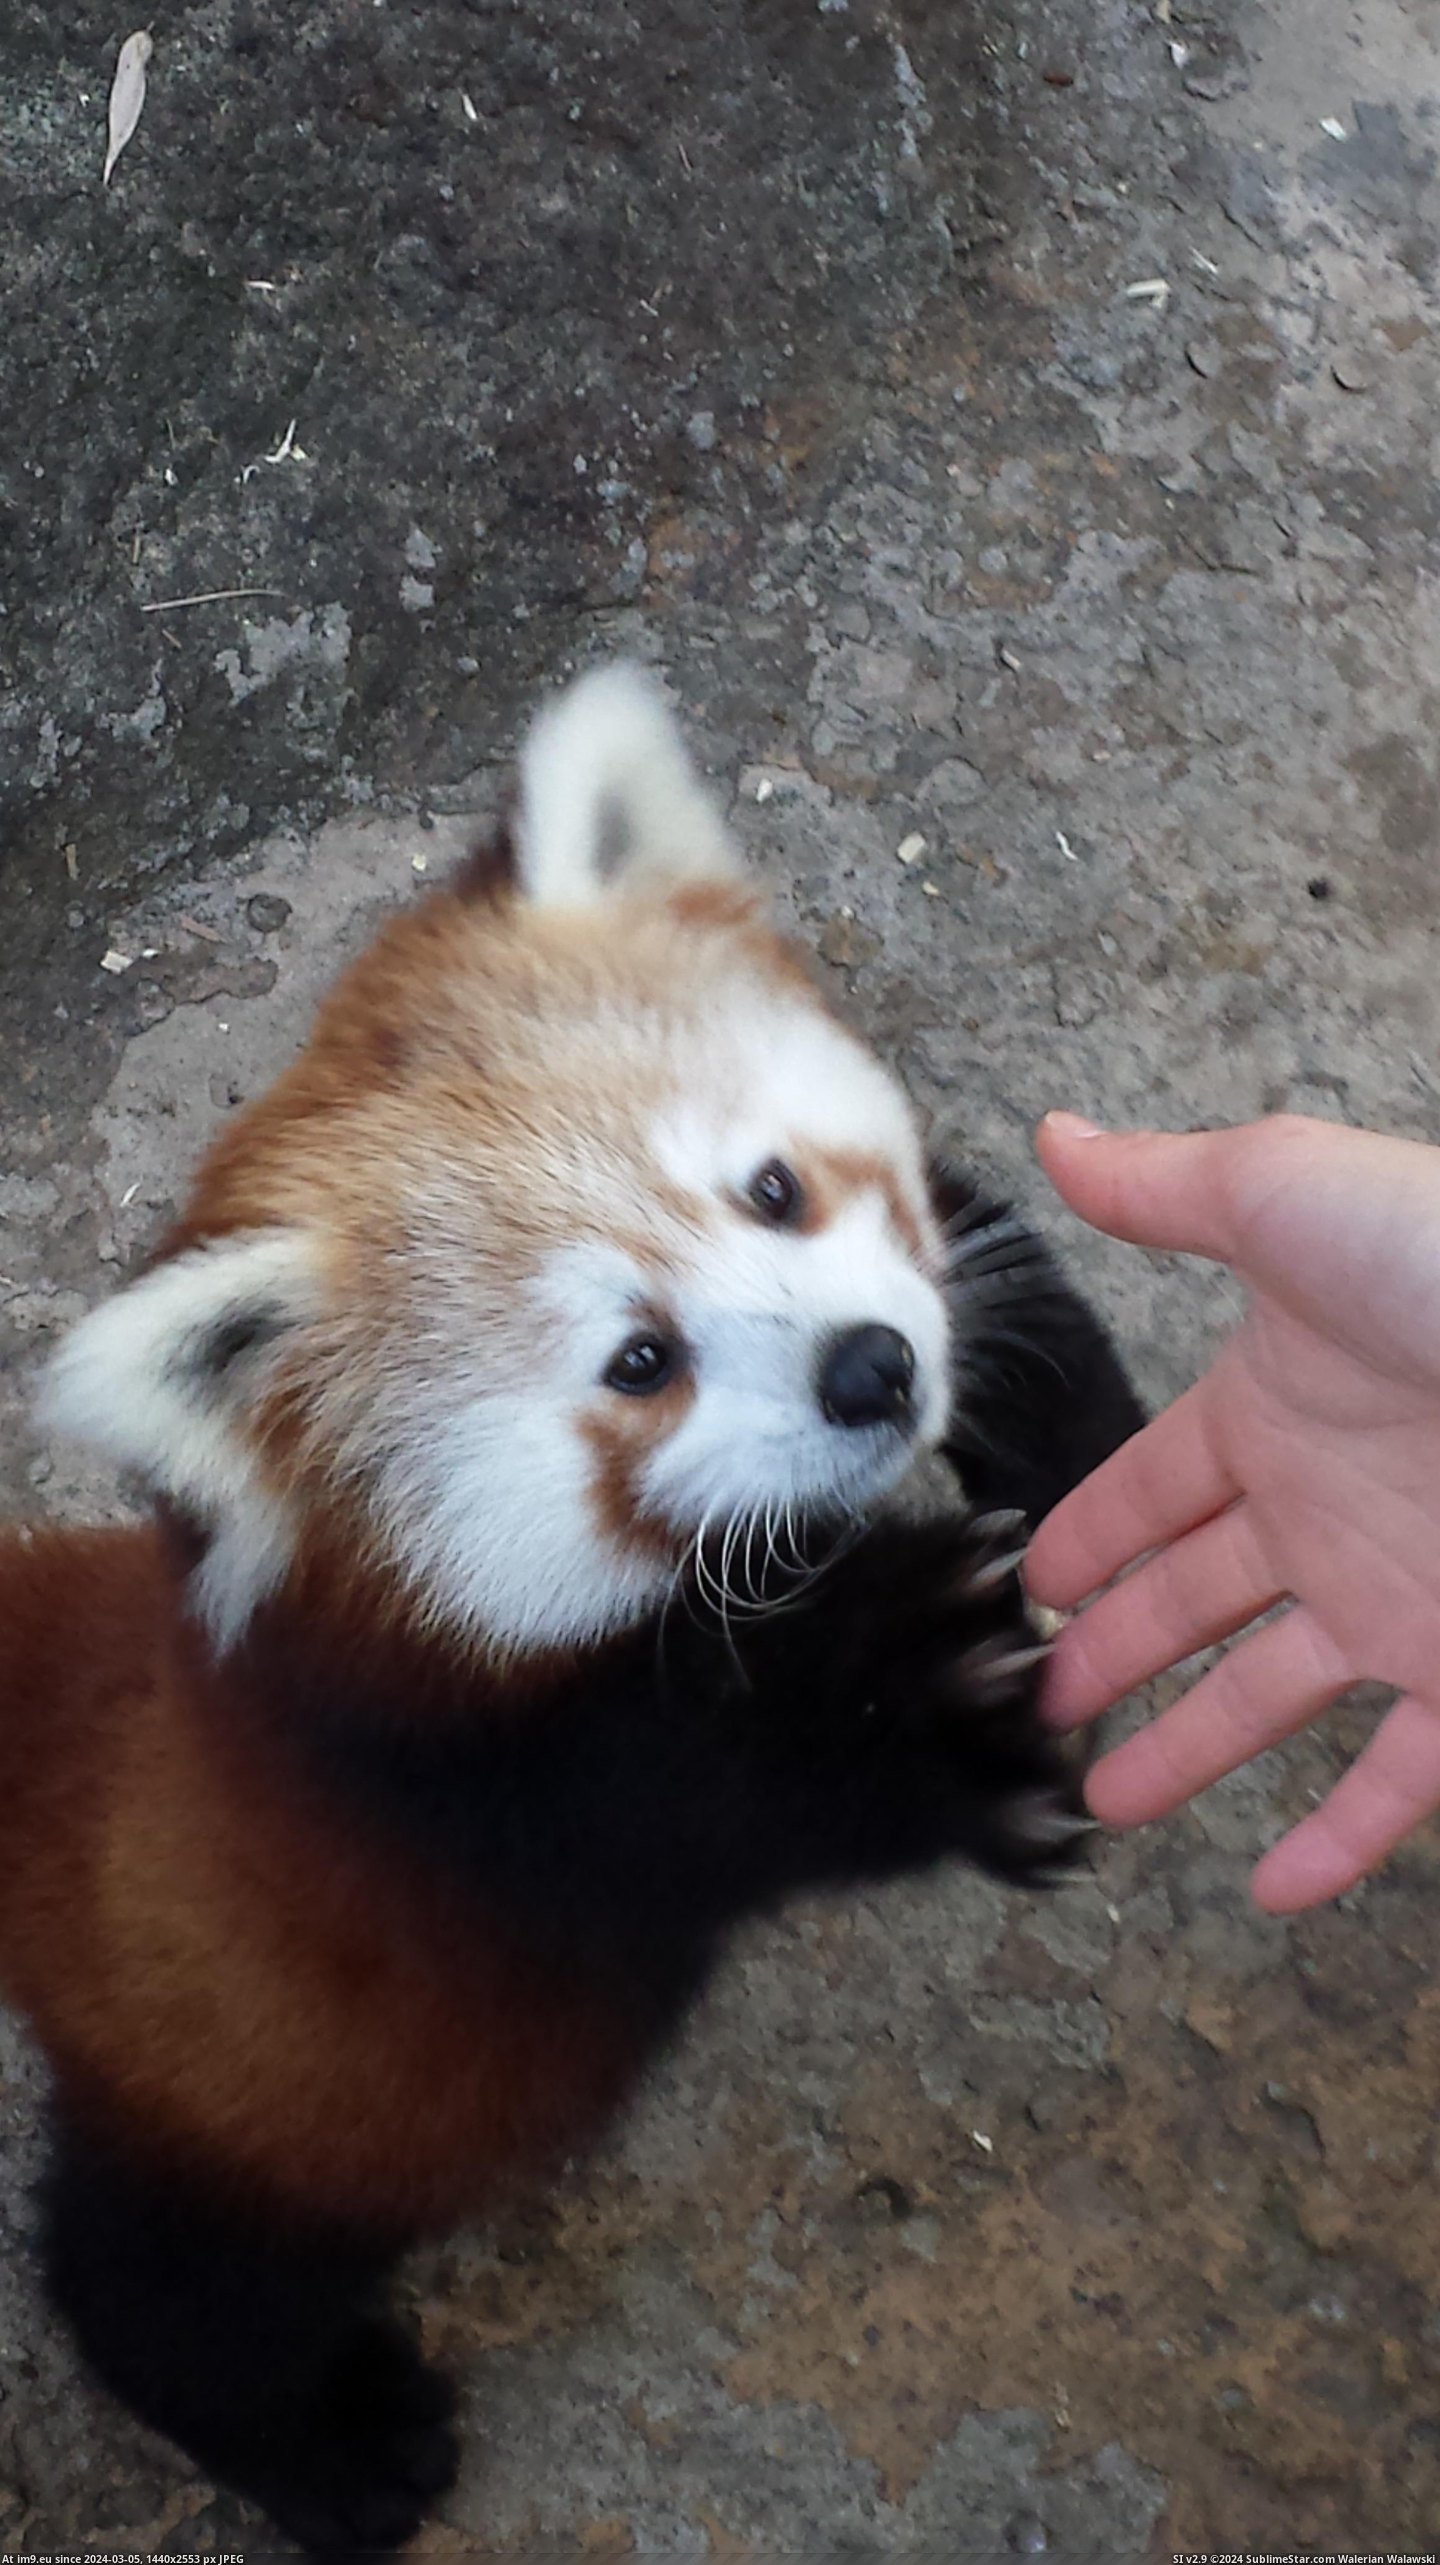 #Red #Girlfriend #Zoo #Shake #Panda #Got #Hands [Aww] My girlfriend got to shake hands with a red panda at the zoo! Pic. (Изображение из альбом My r/AWW favs))